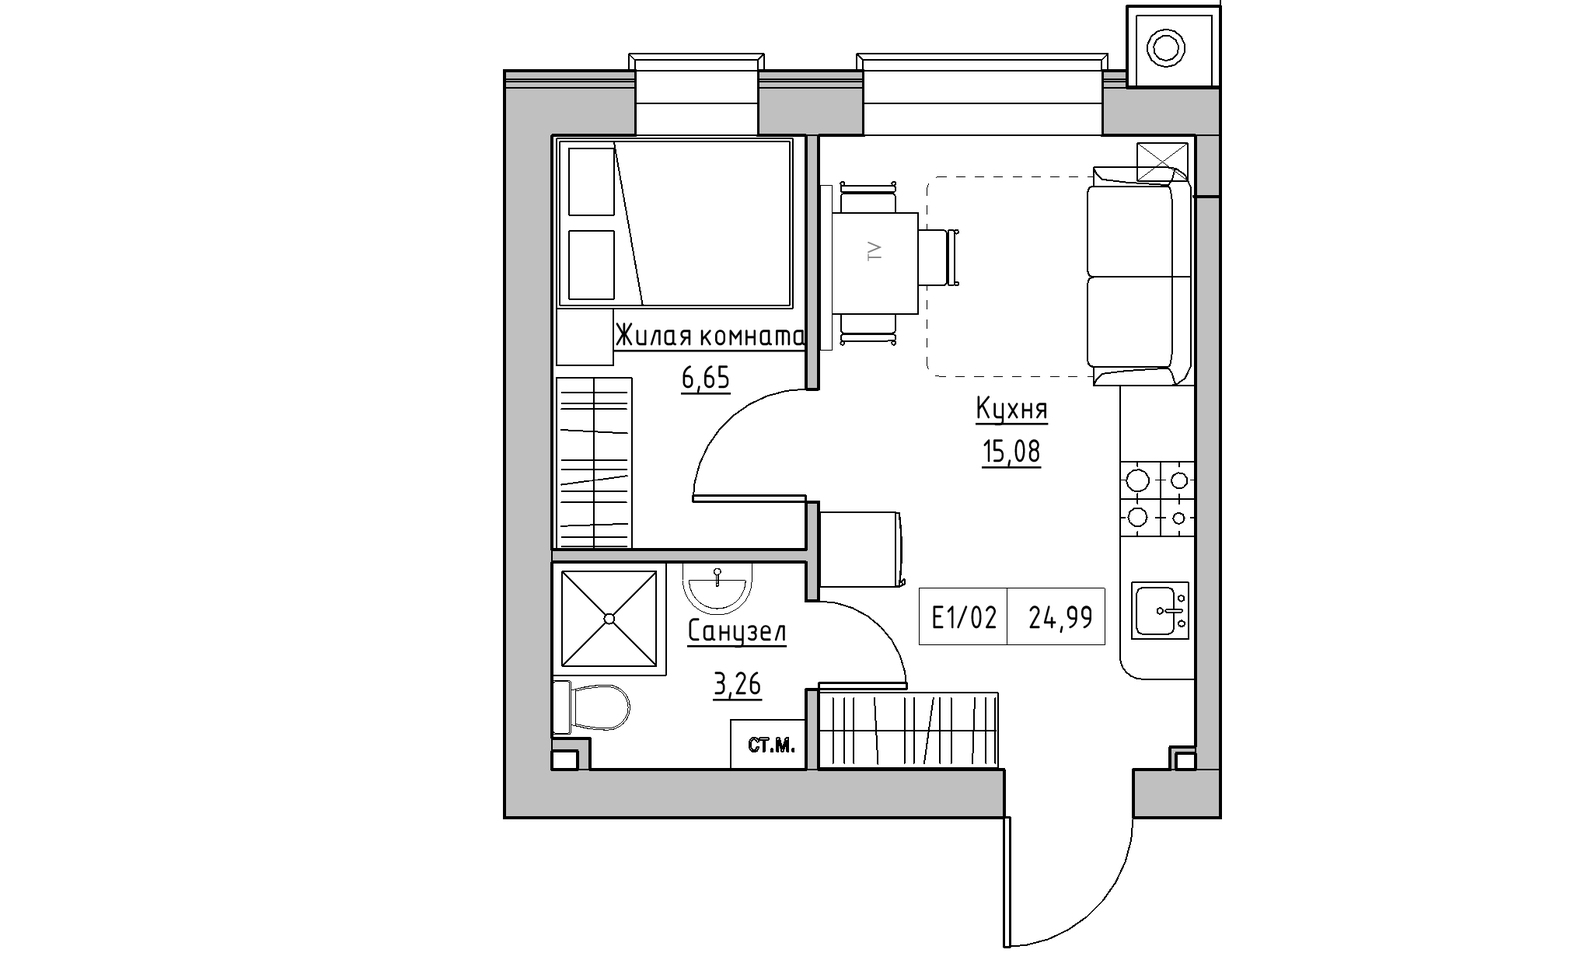 Planning 1-rm flats area 24.99m2, KS-014-02/0004.